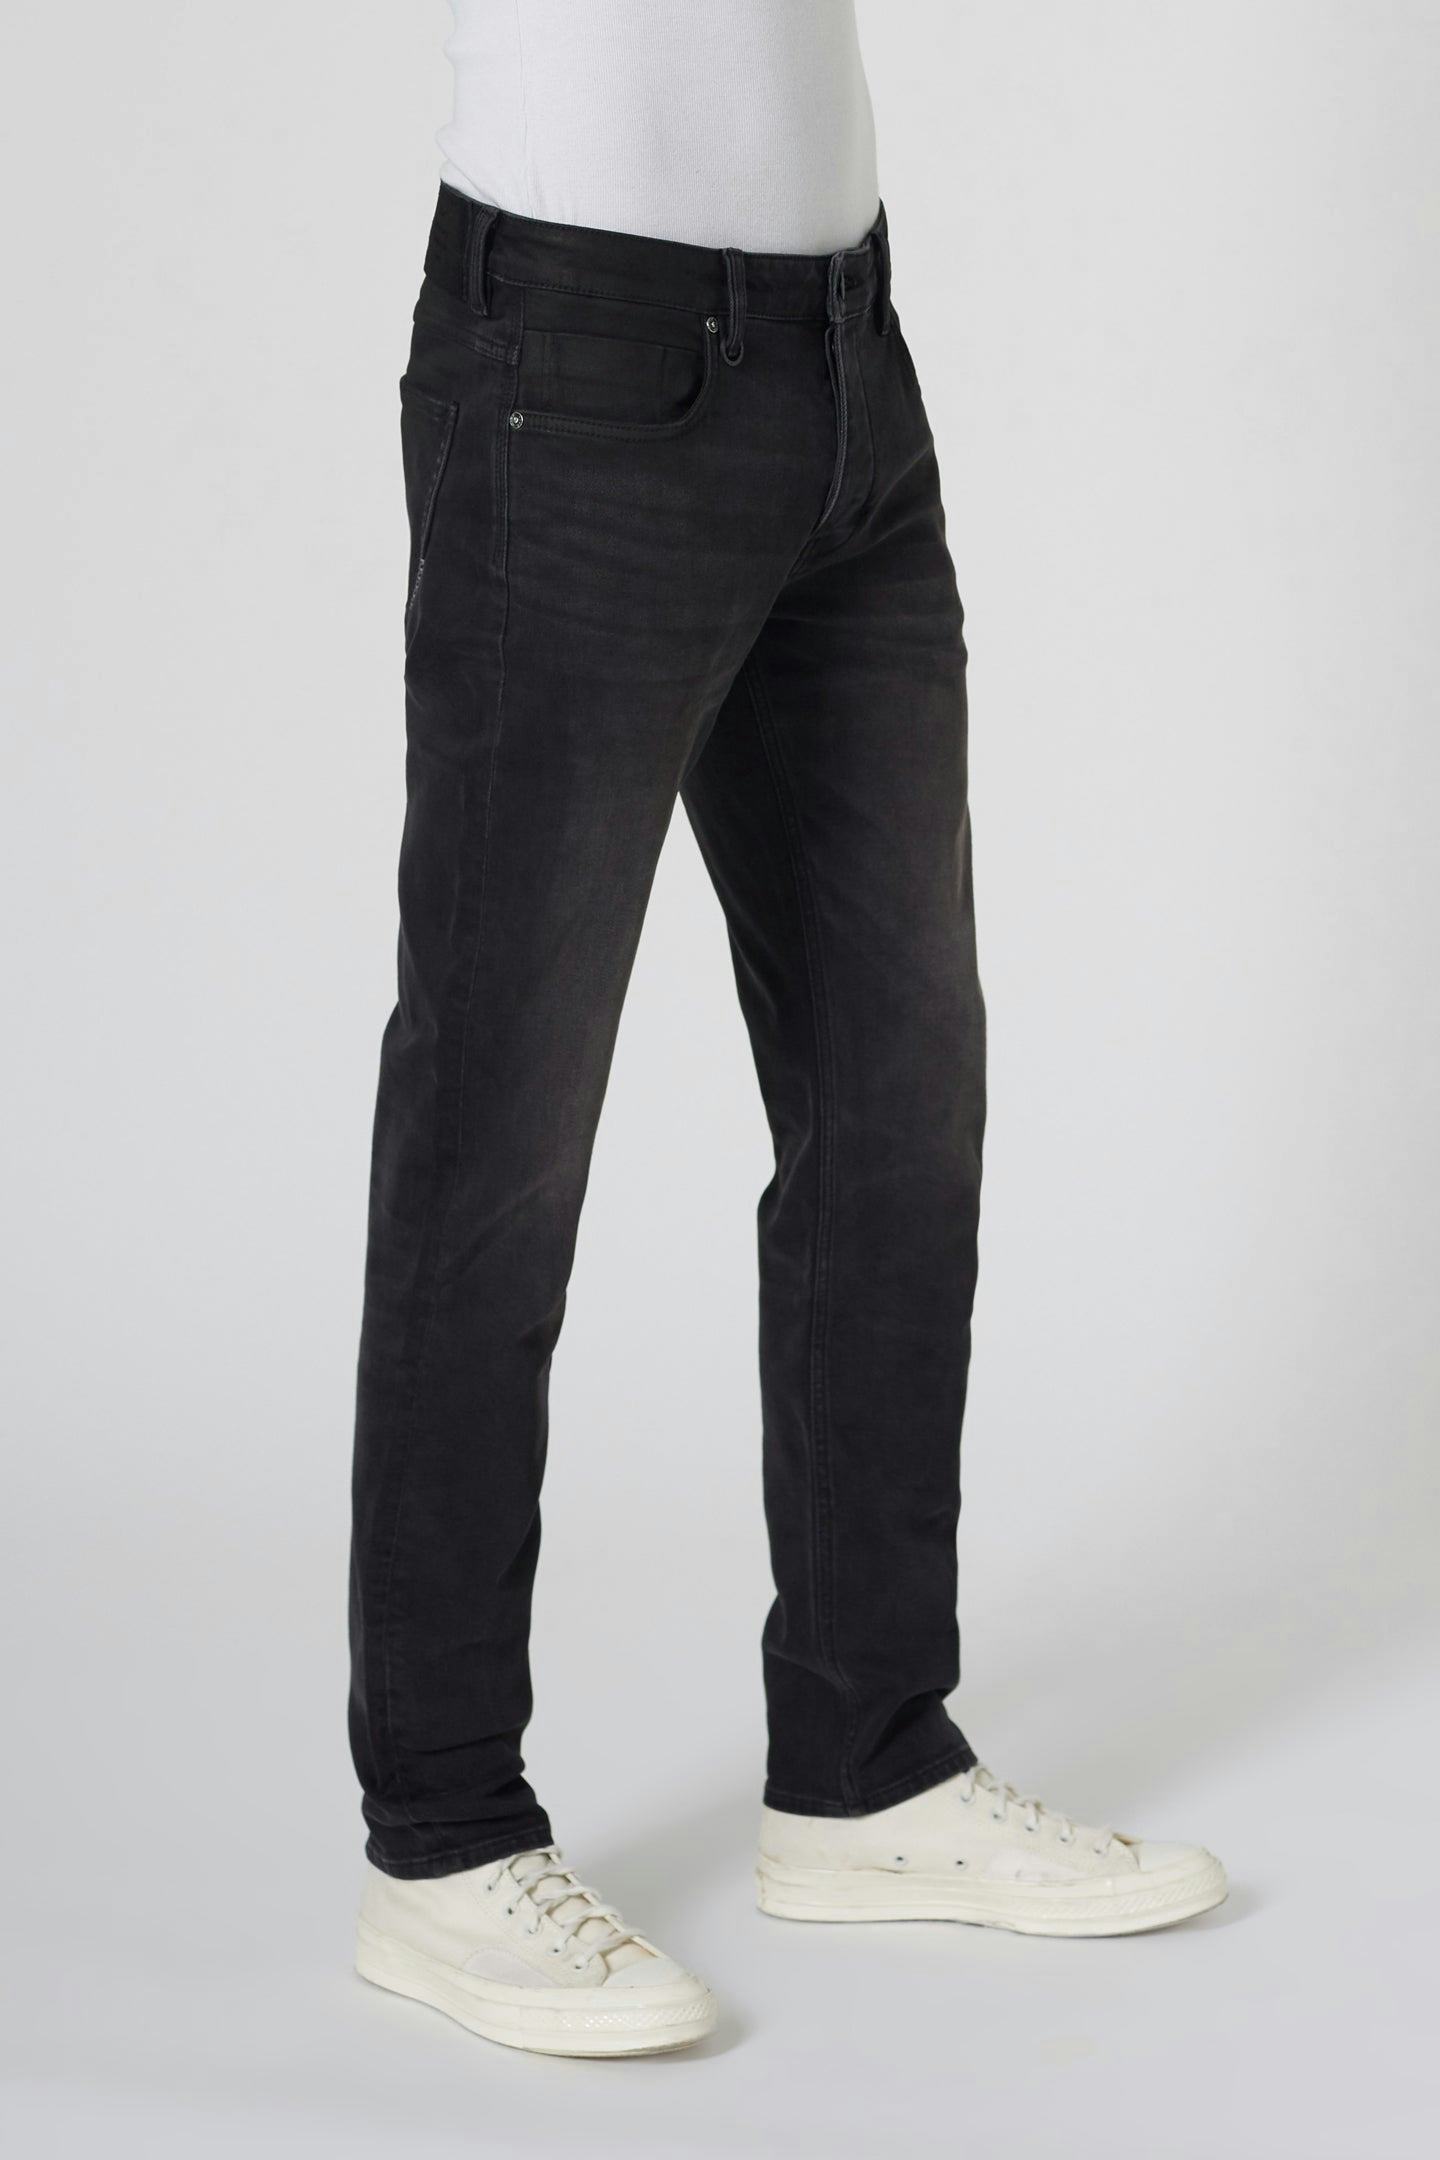 Lou Slim - Reel Neuw dark black mens-jeans 